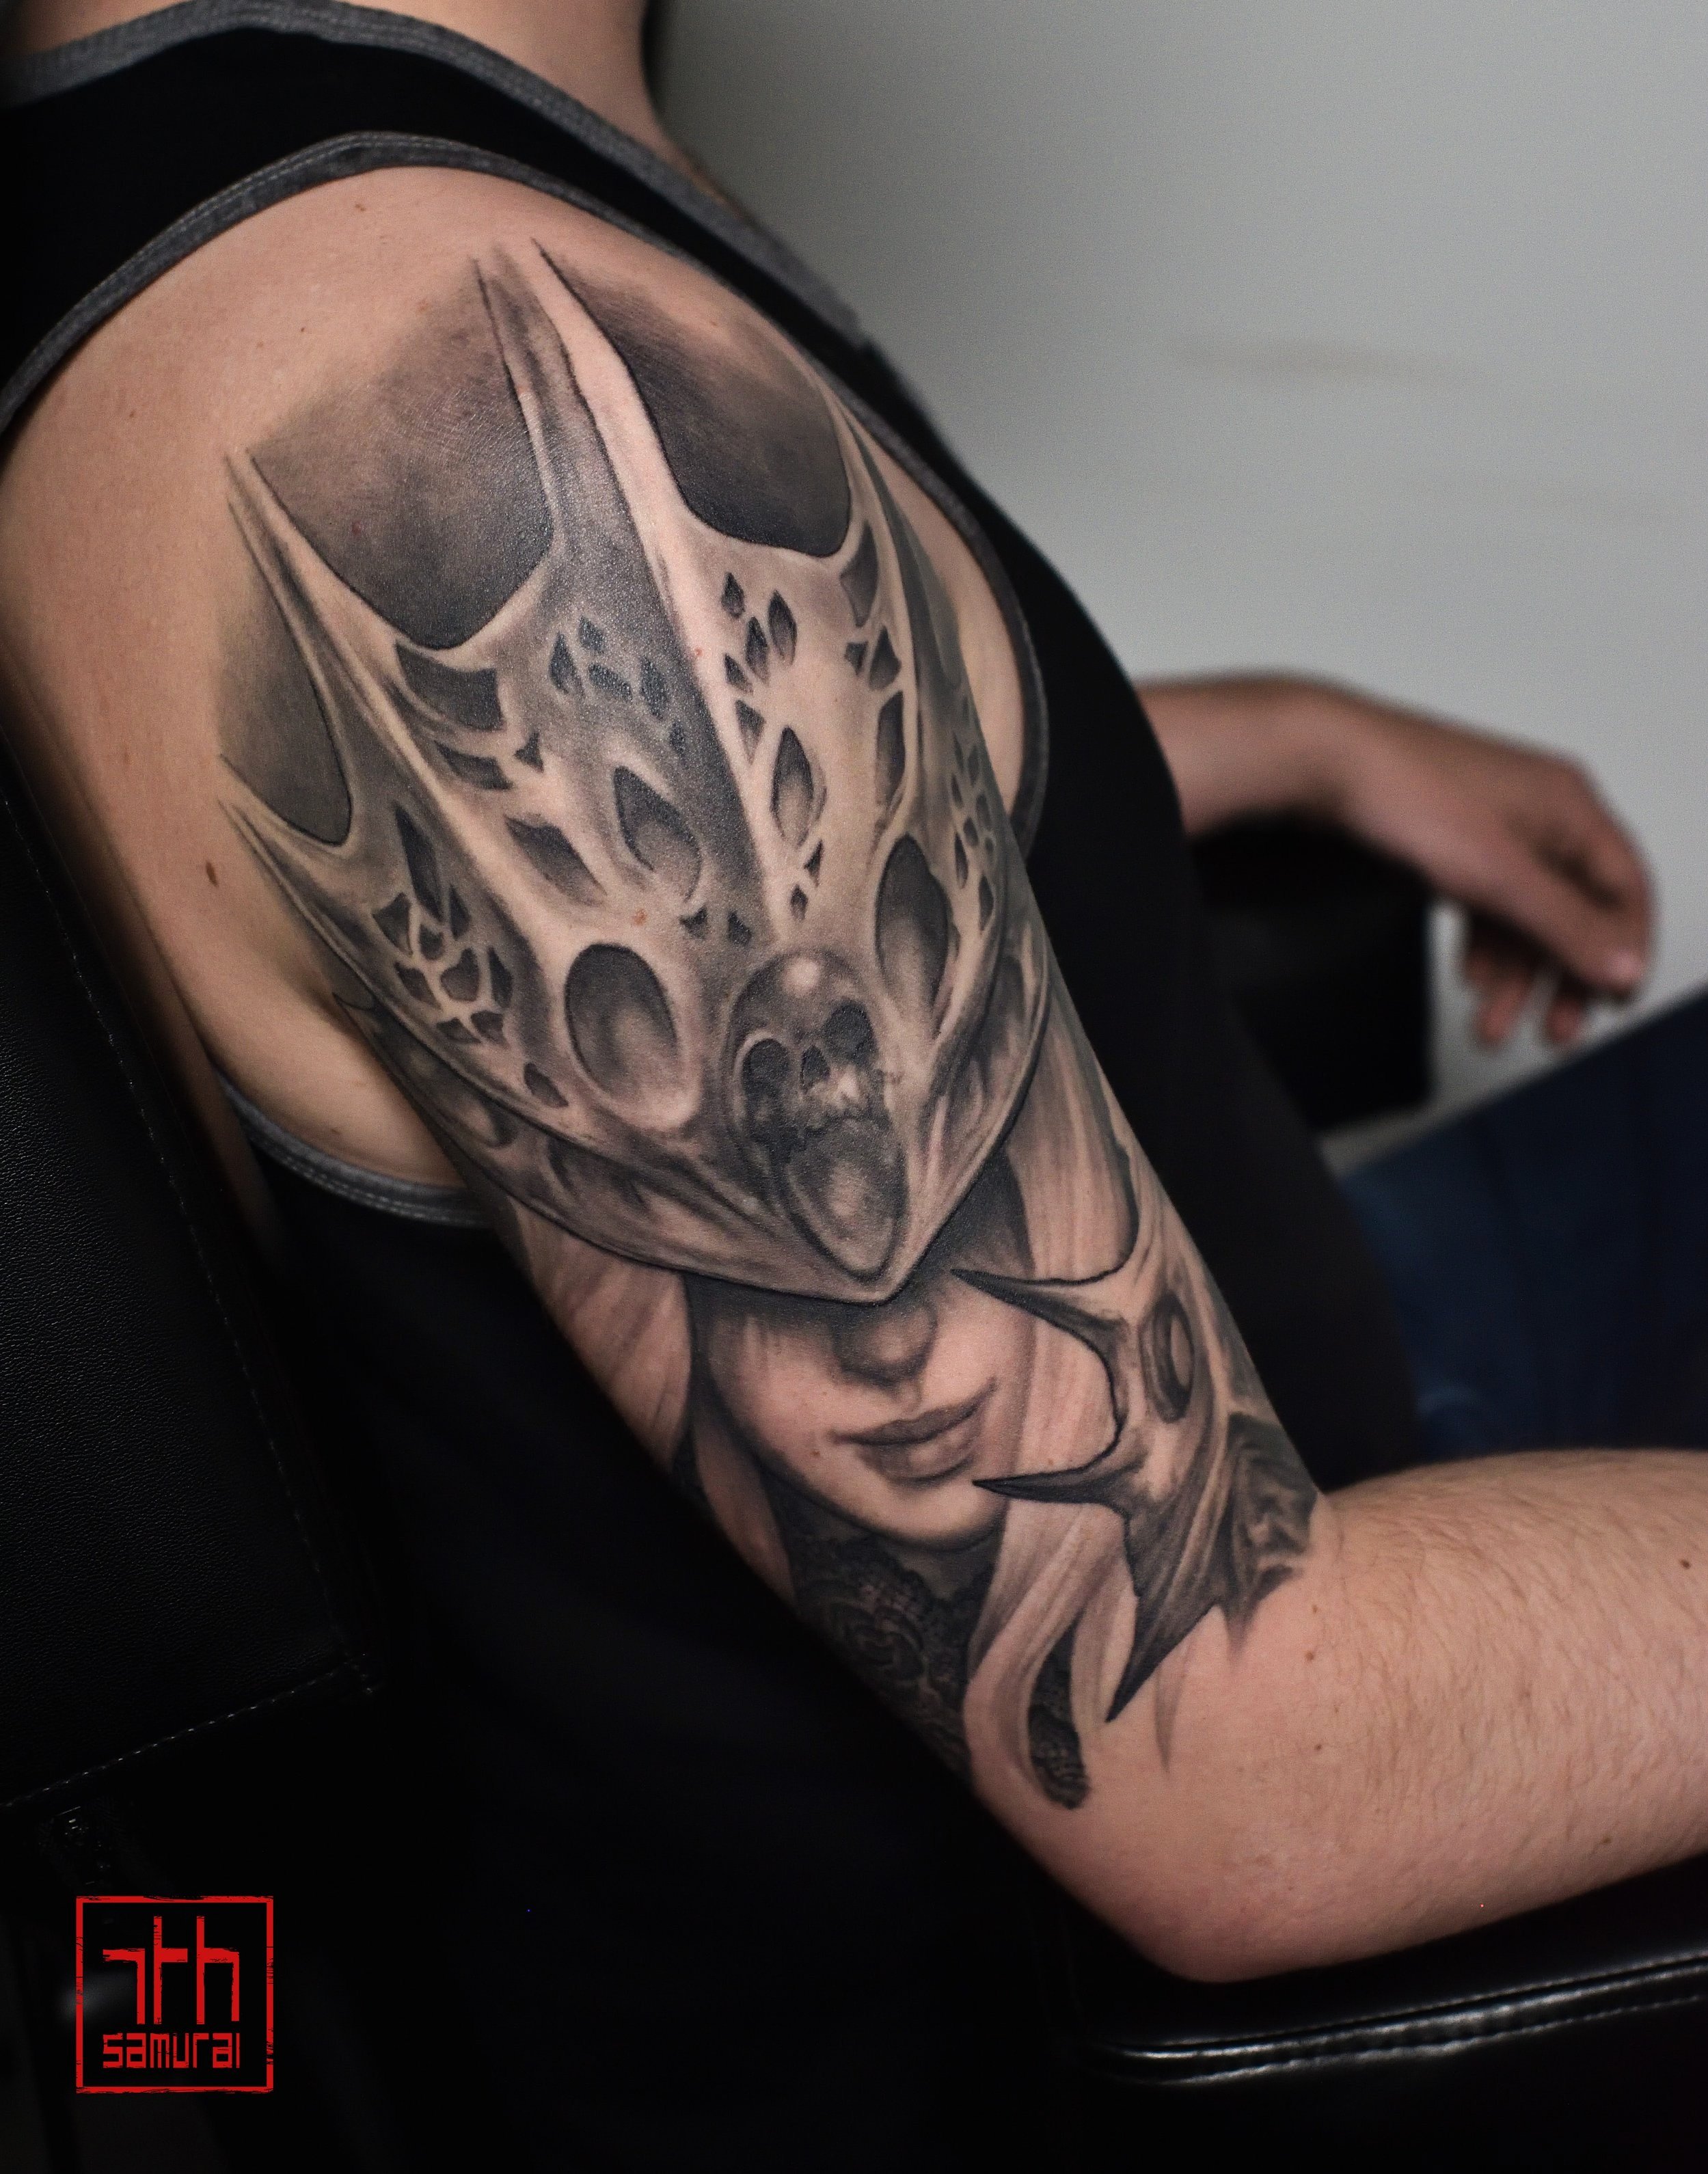 aldrich from dark souls 3  men's video game gamer upper arm tattoo  asian Tattoo artist: Kai at 7th Samurai. YEG Edmonton, Alberta, Canada best 2023